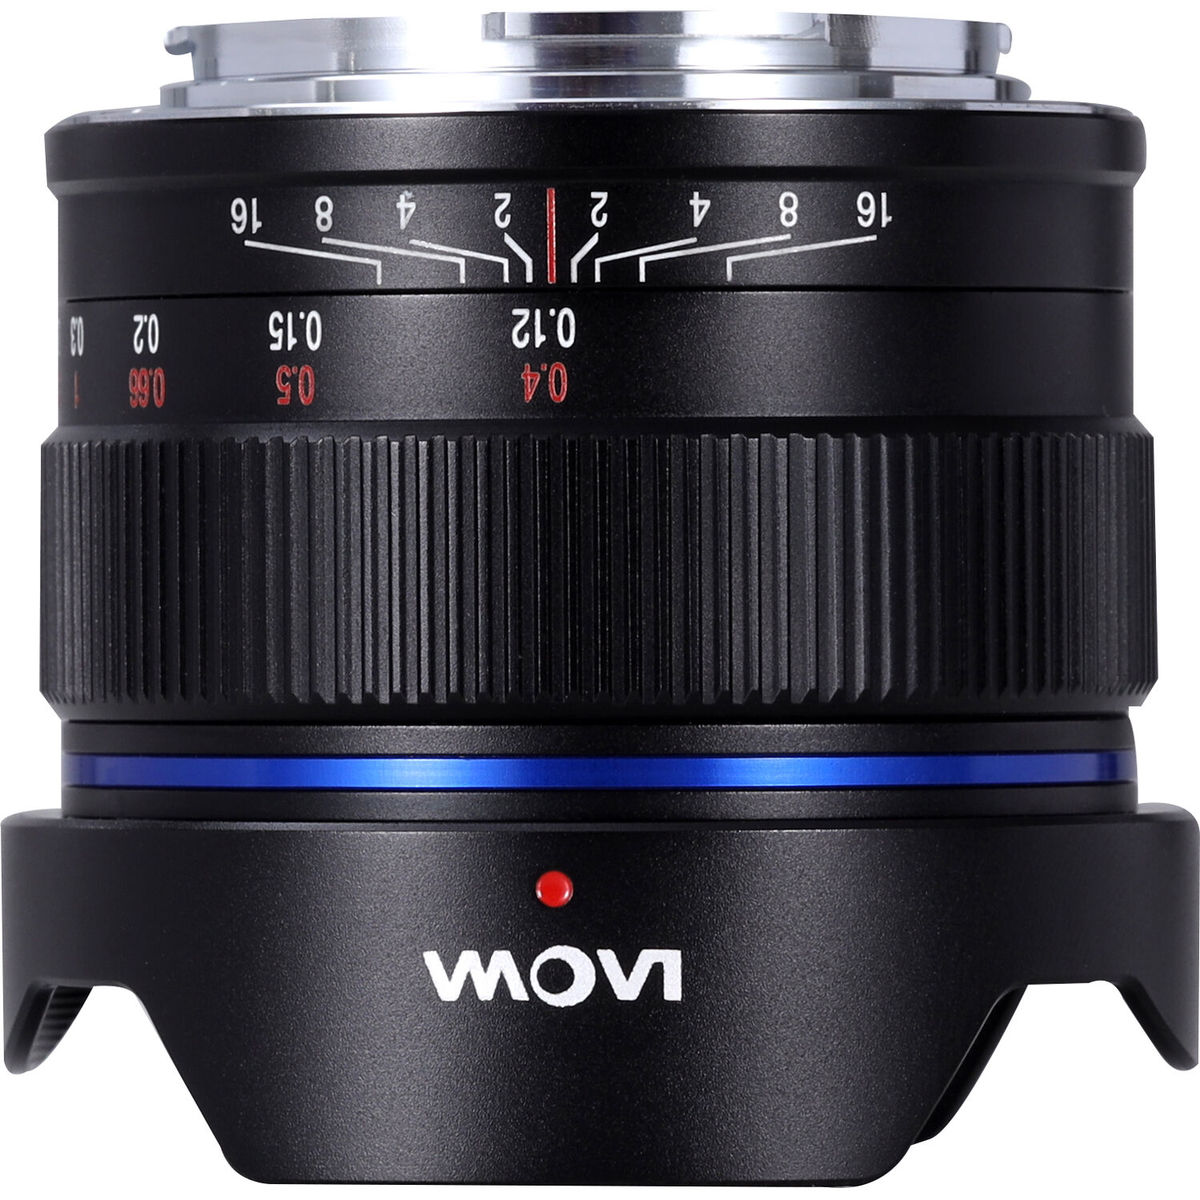 3. Laowa Lens 10mm f/2.8 Zero-D (MFT)